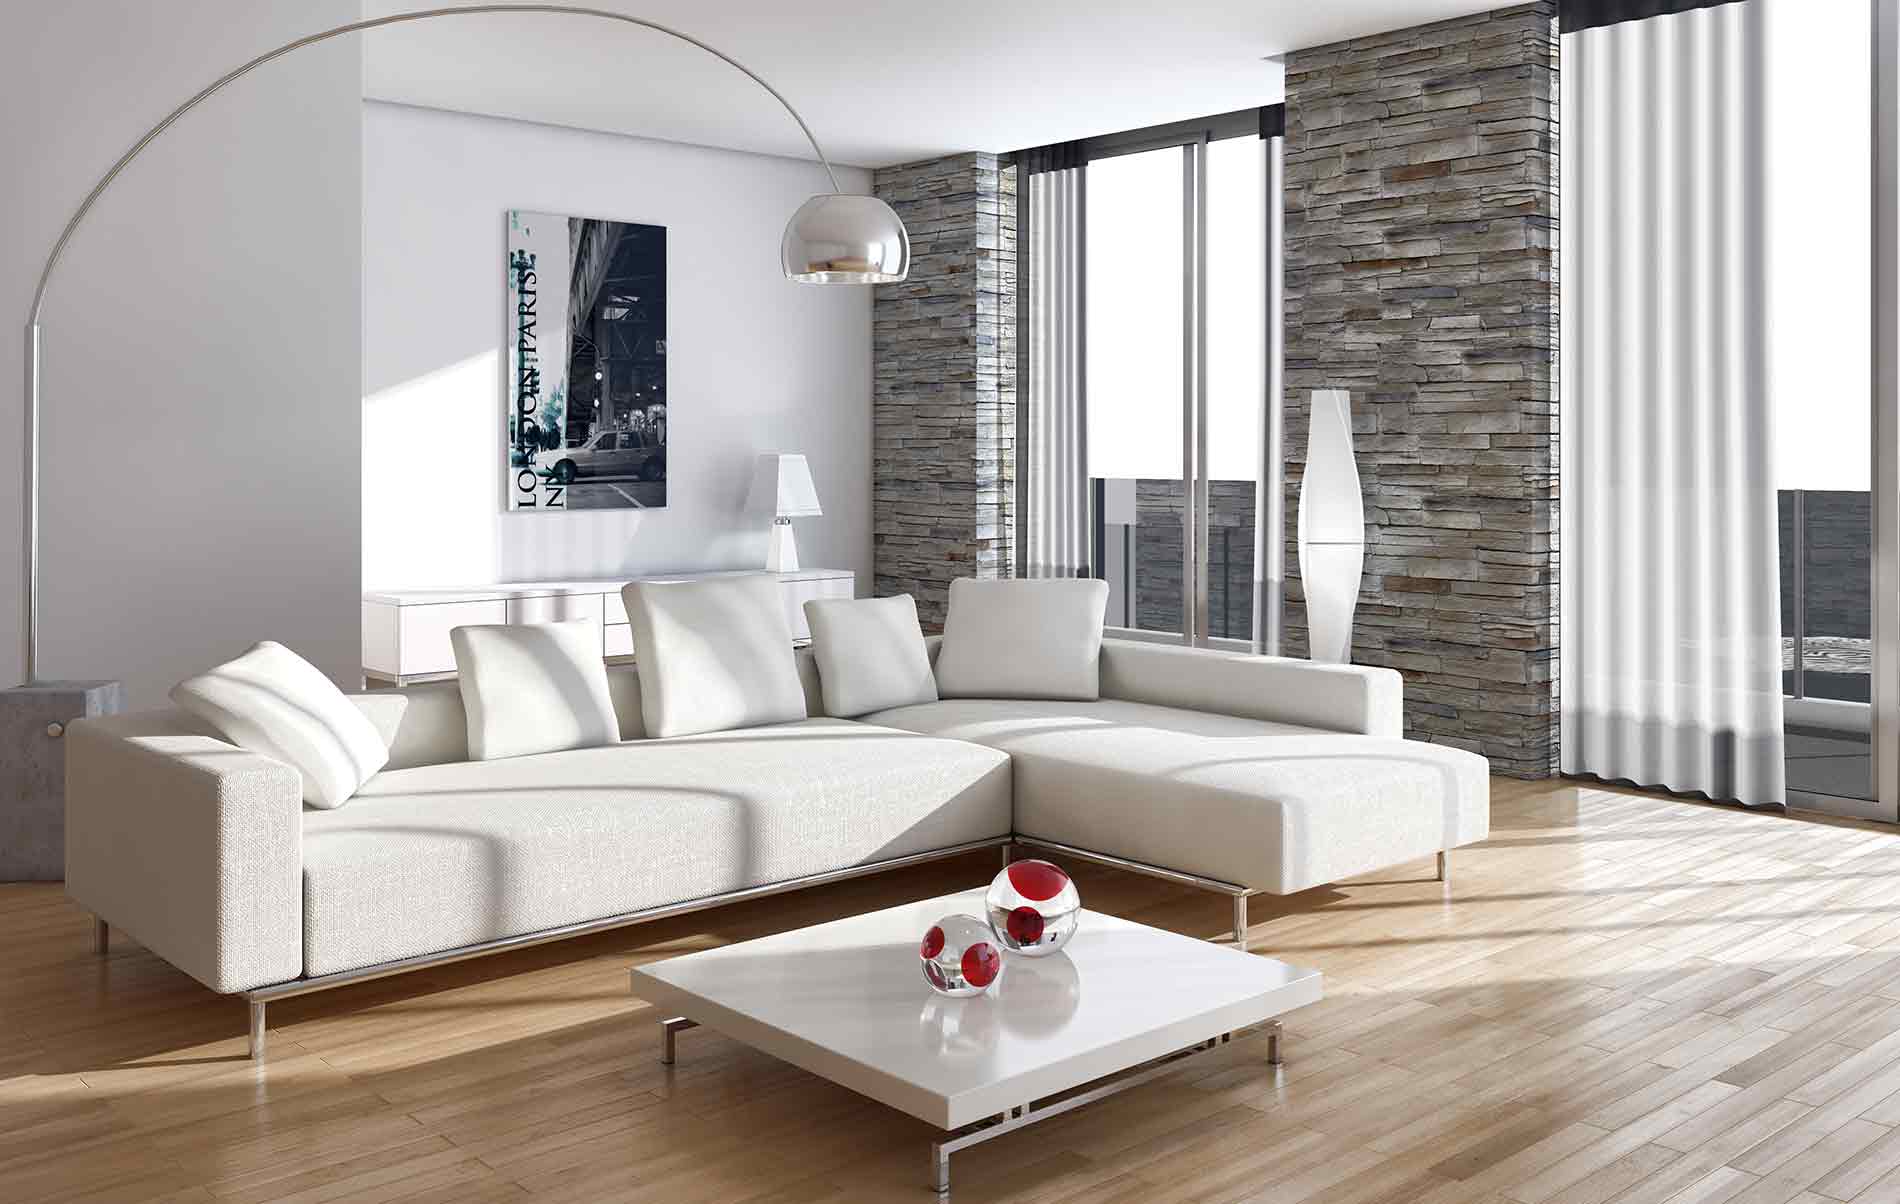 spacious, white living room